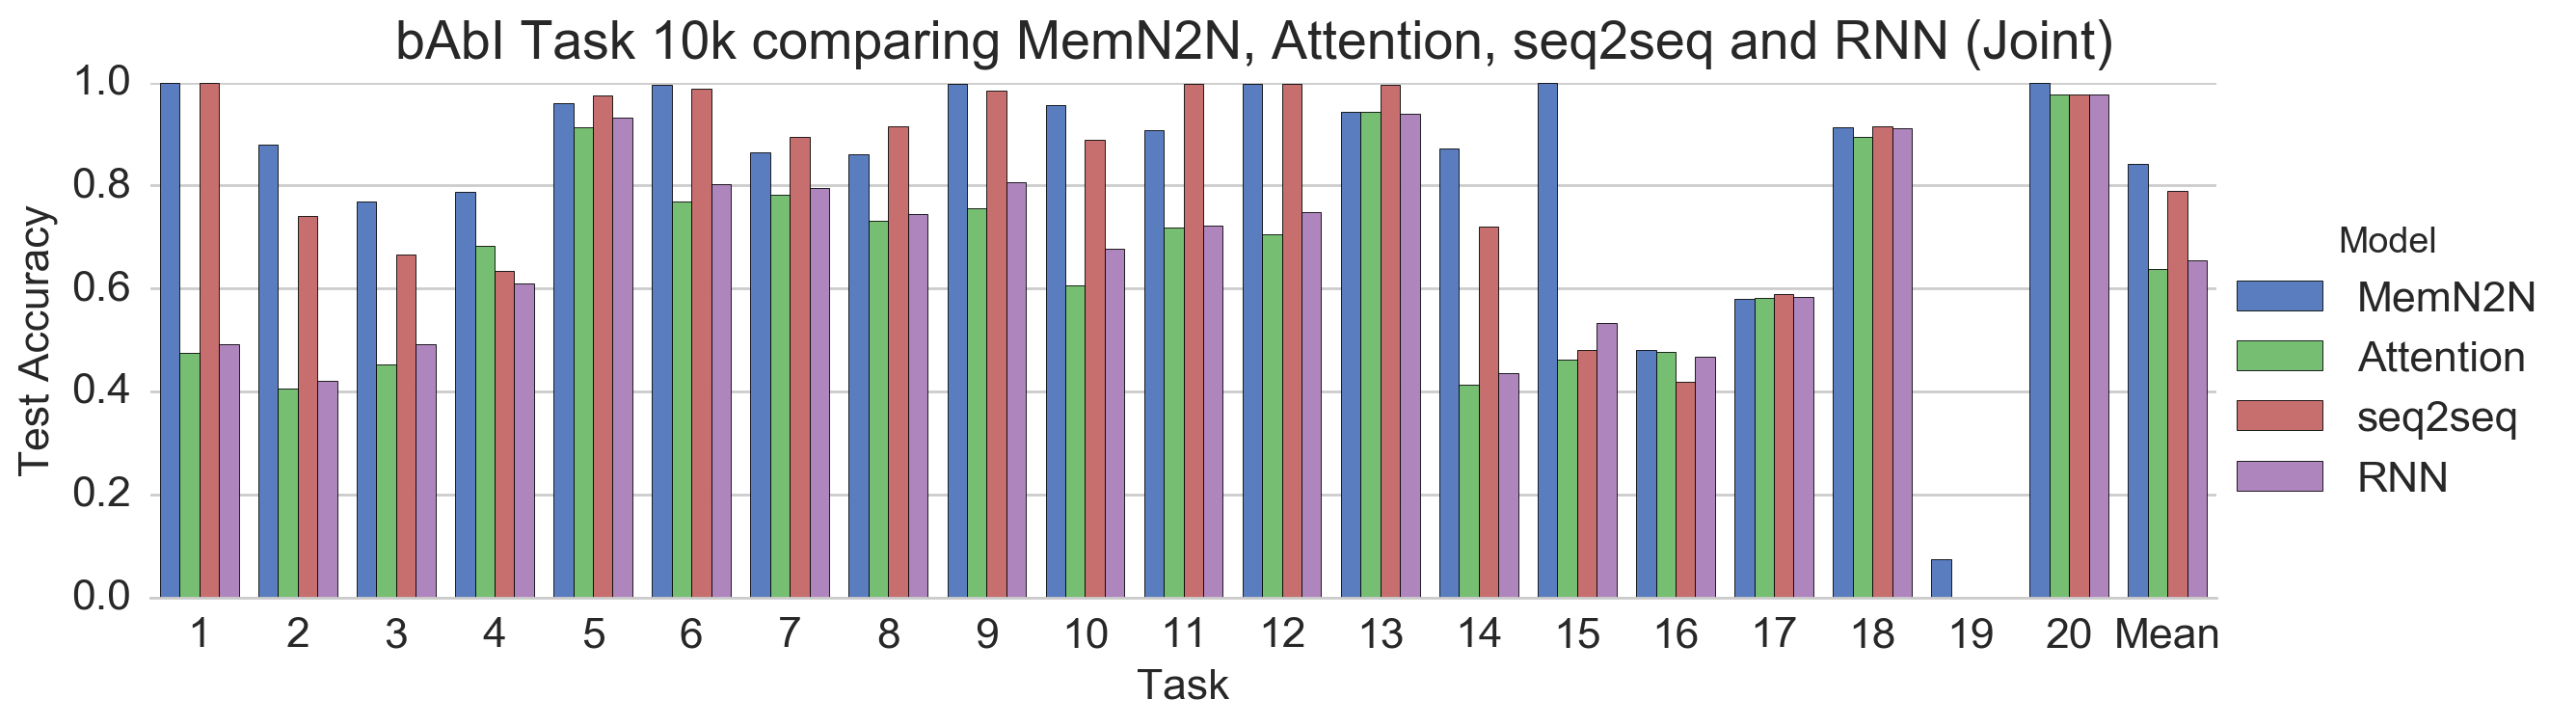 bAbI Task 10k comparing MemN2N, Attention, seq2seq and RNN (Joint)